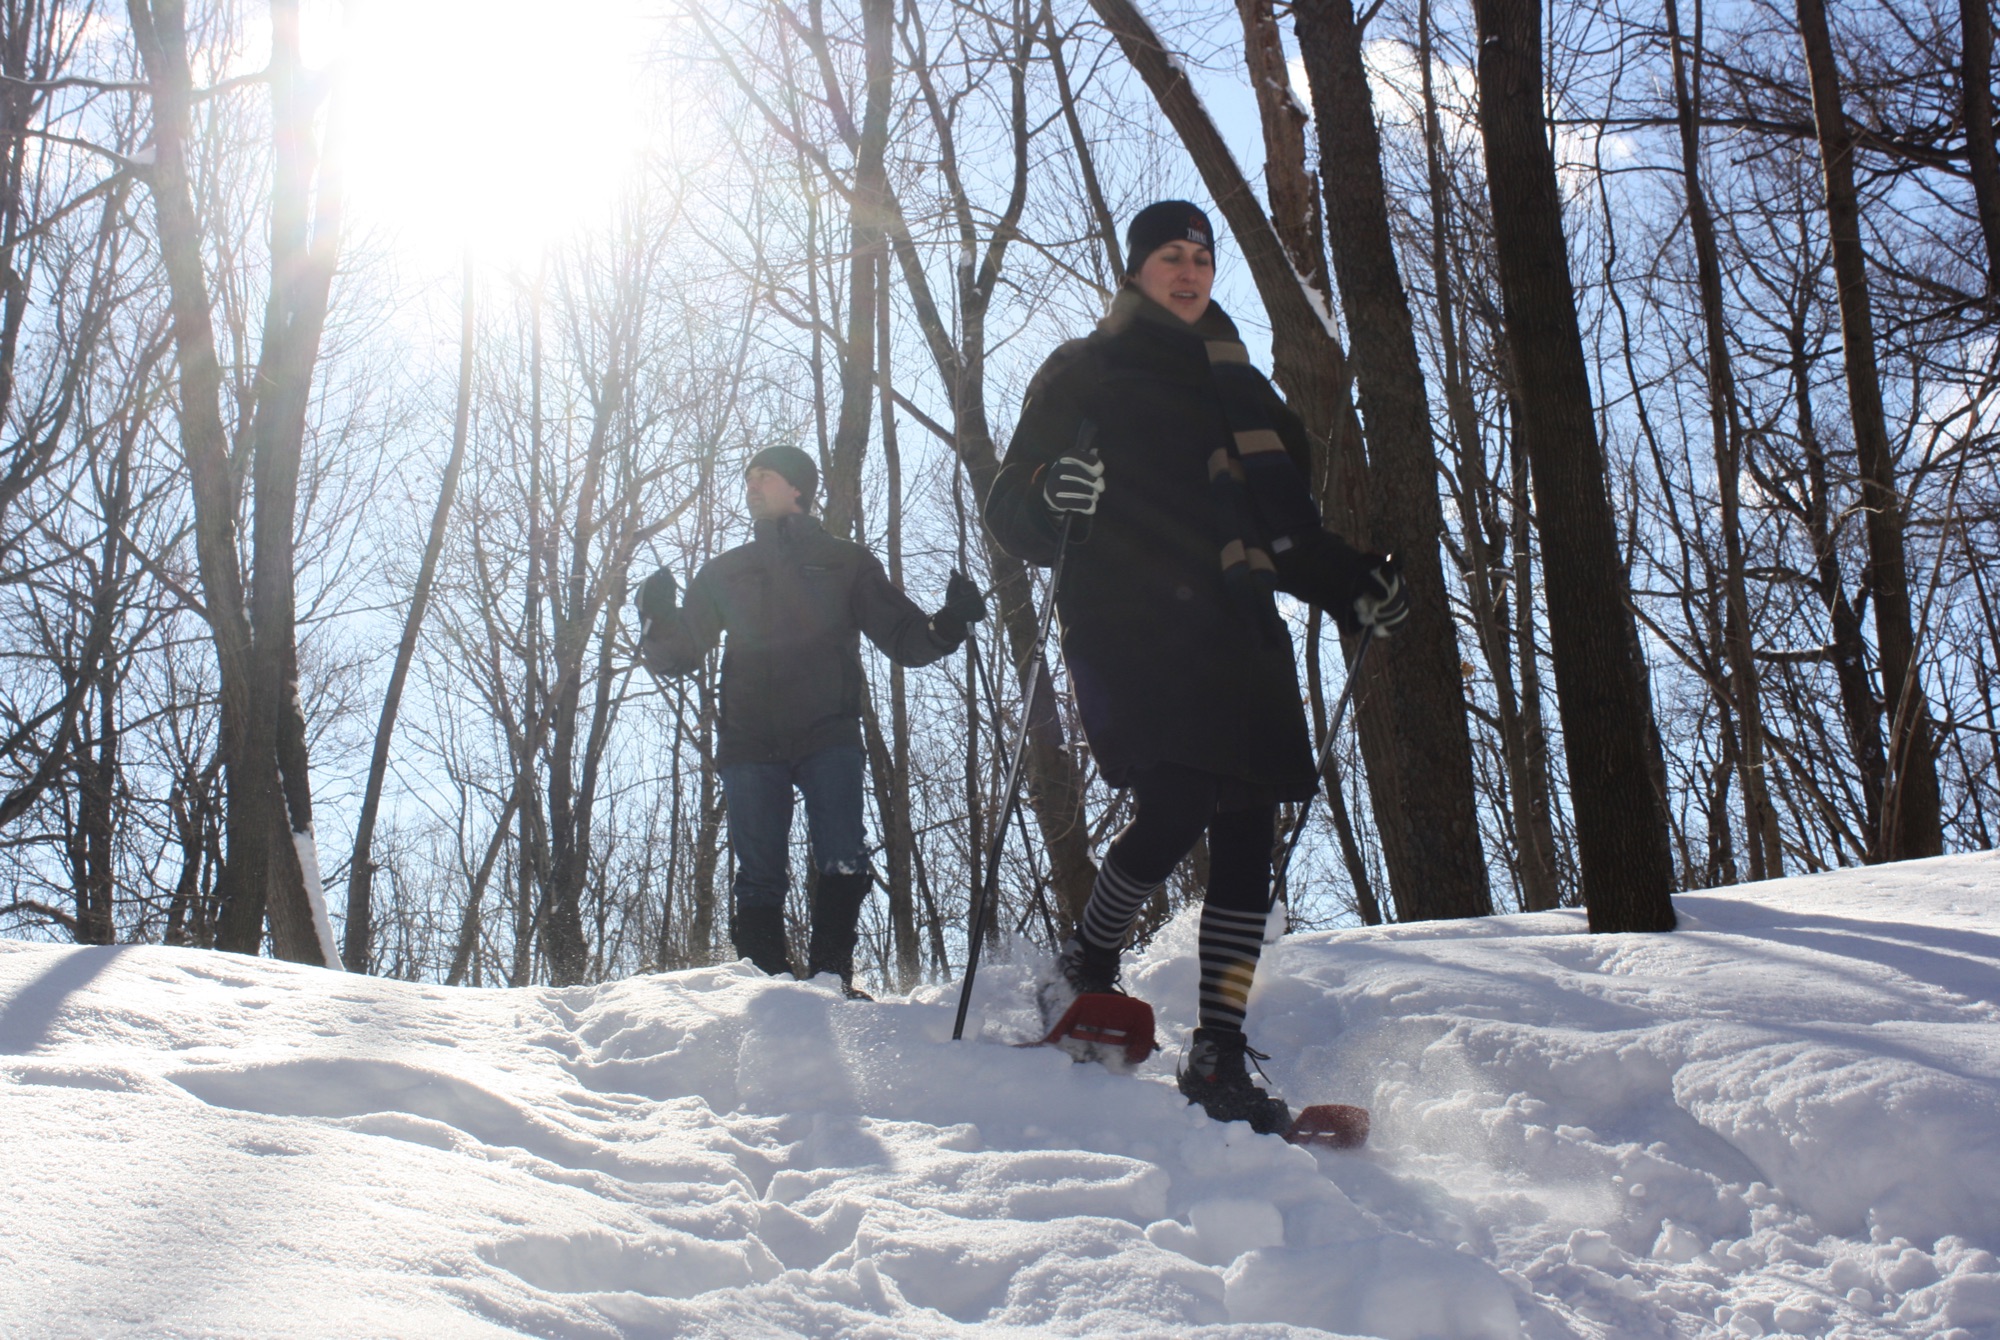 Snowshoe Excursion: The Joy of Winter